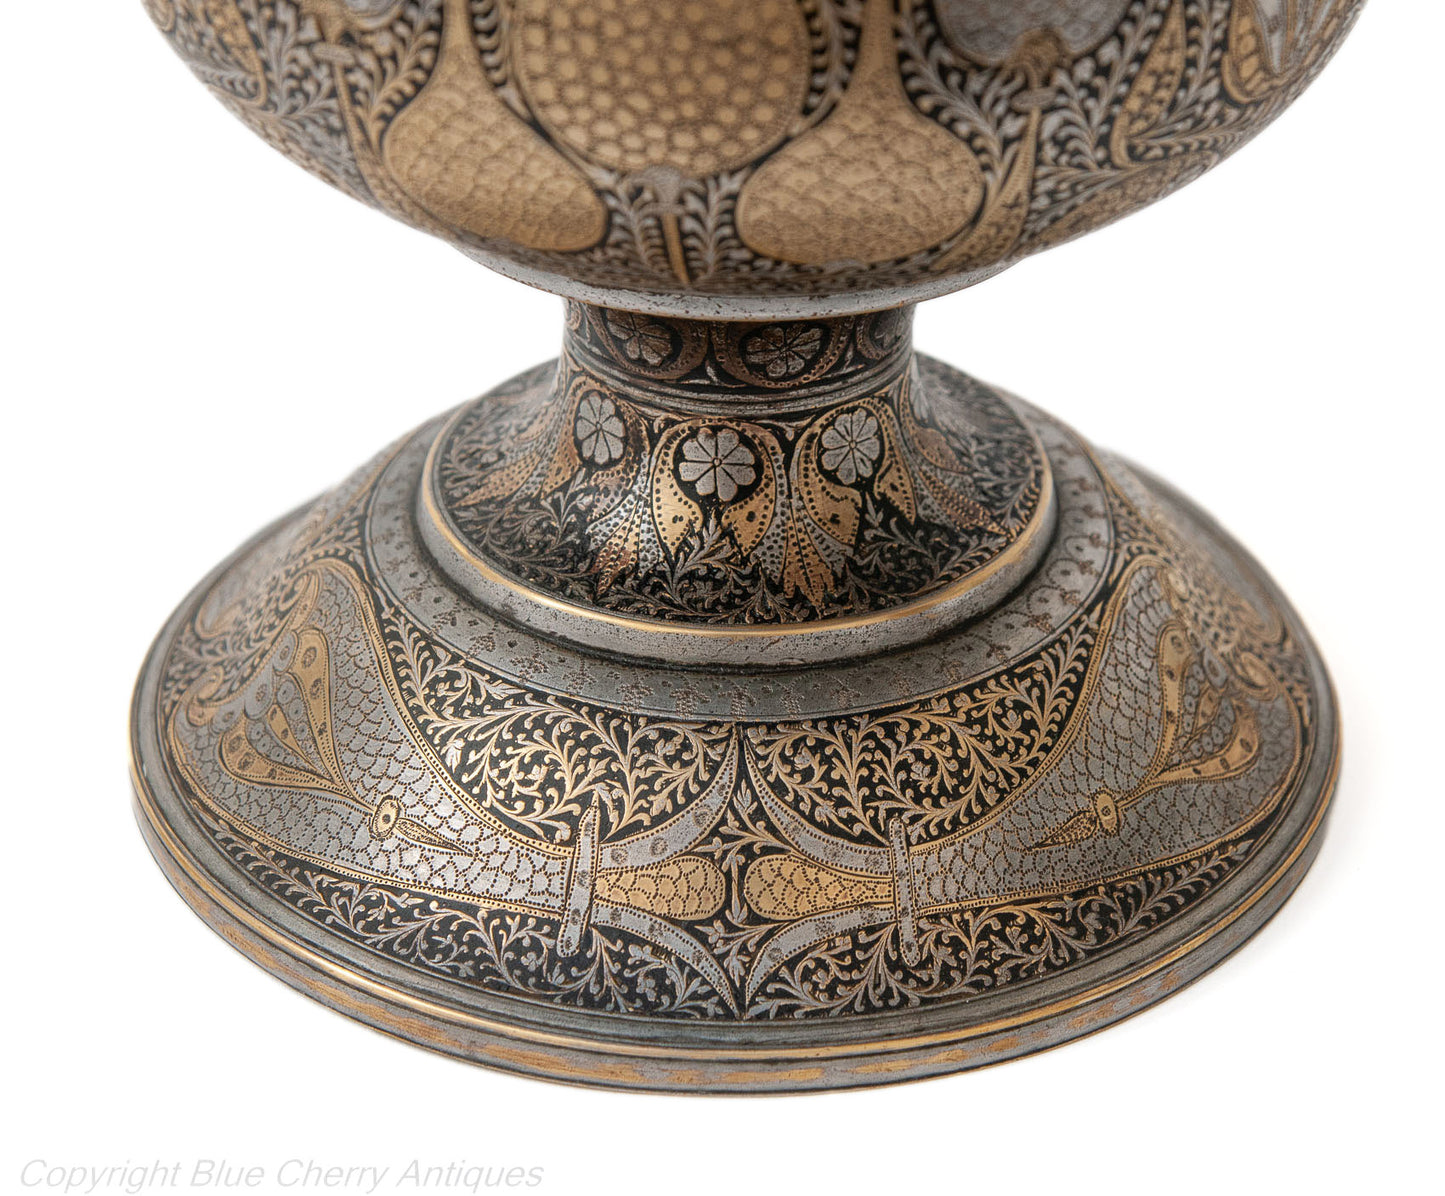 A Fine Antique 19th Century Indian Karnataka Deccan Bidri Ware Vase (Code 1827)